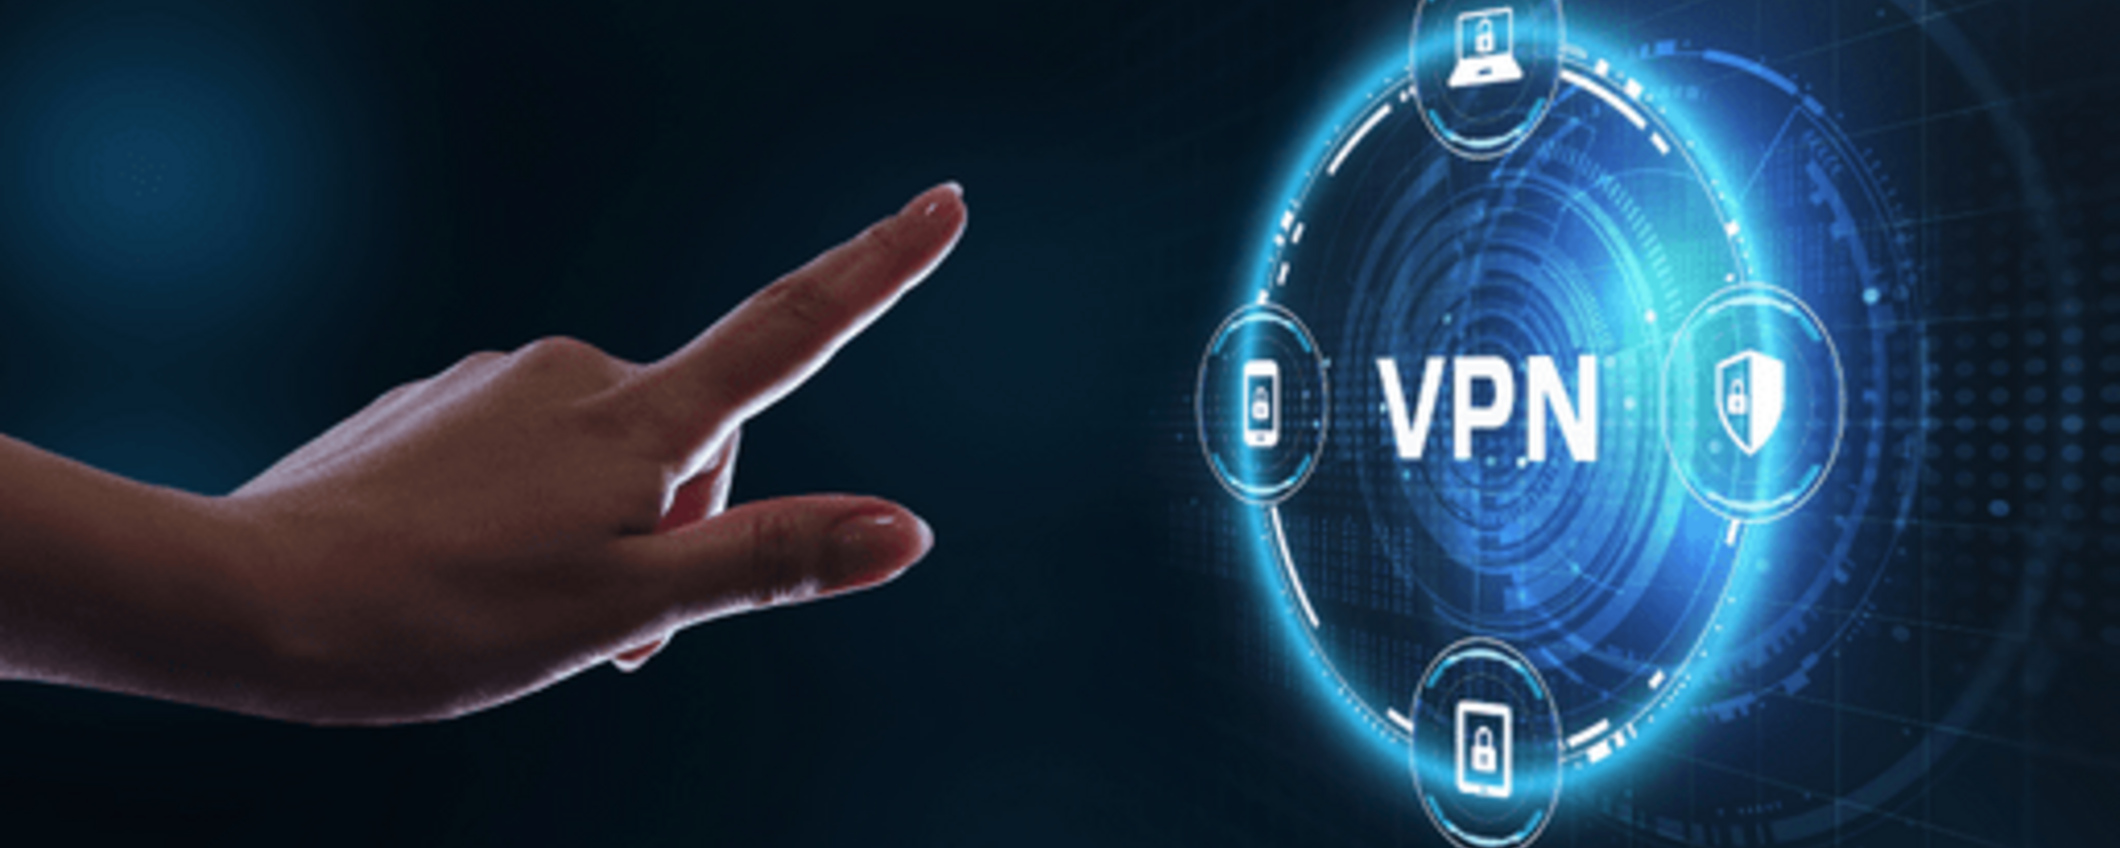 Offerta secca: CyberGhost VPN a soli 2,19 euro al mese per 2 anni